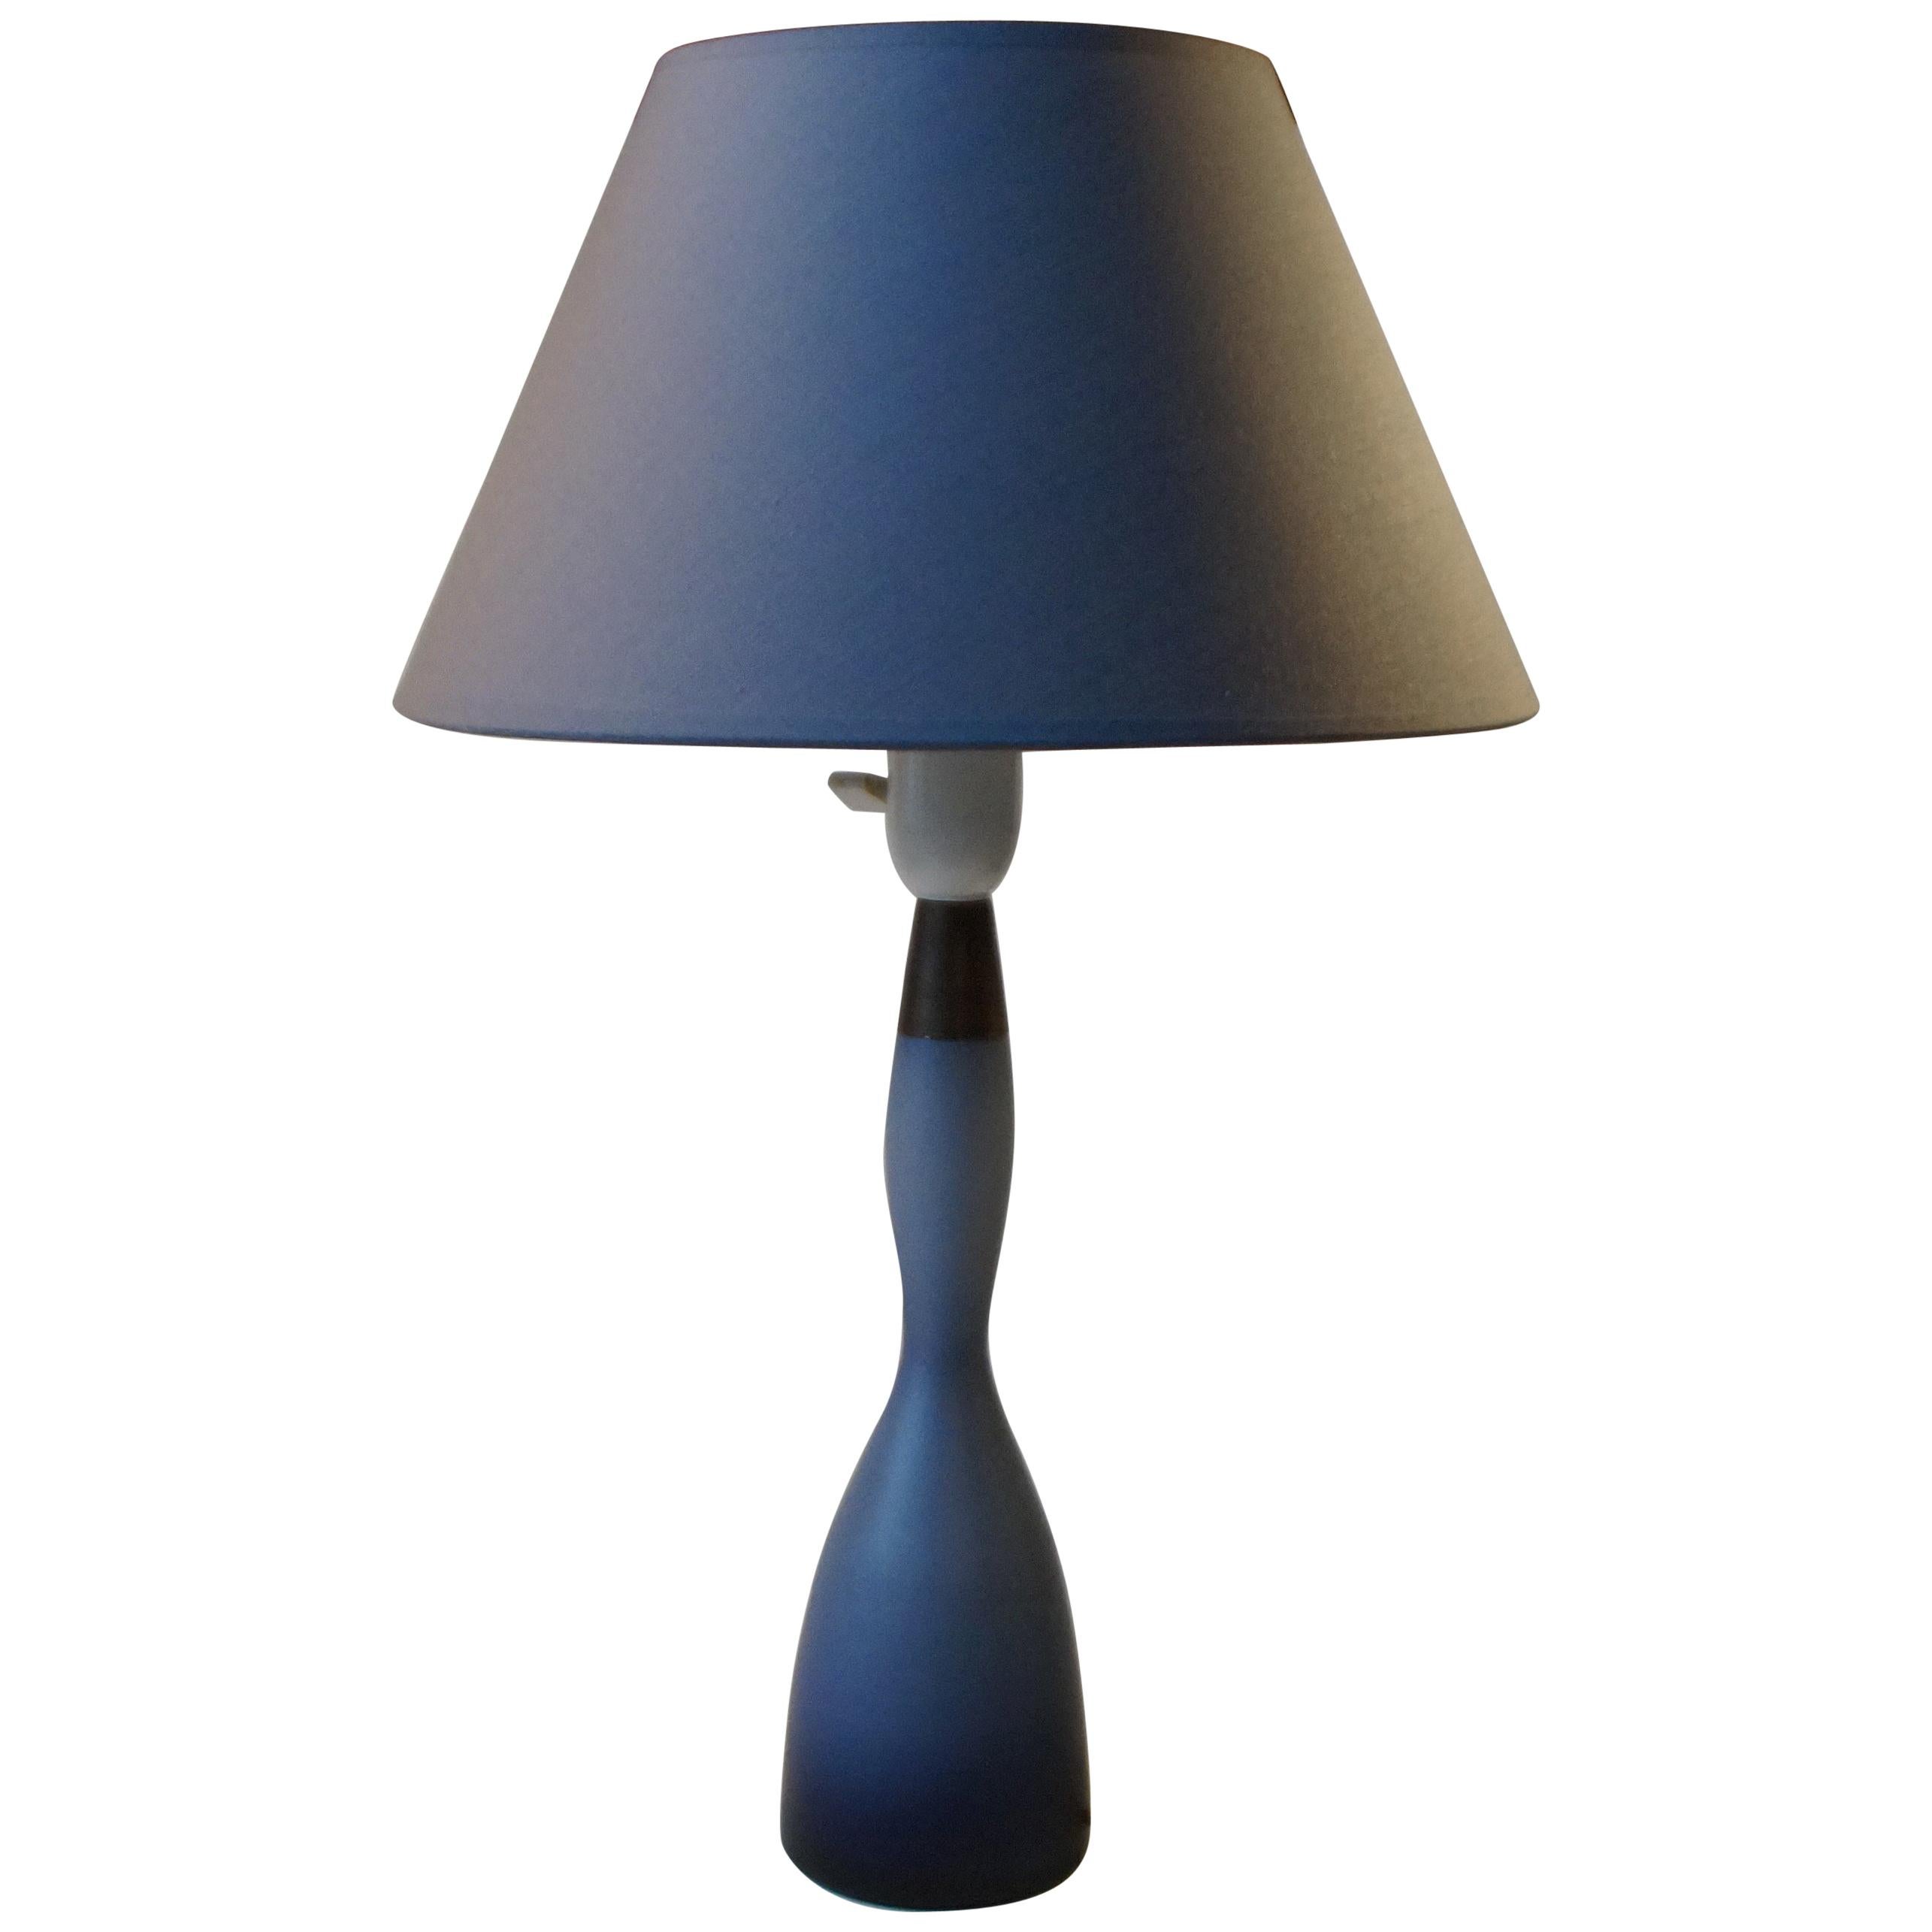 'Nightblue' Danish Cased Glass Table Lamp by Bent Nordsted, Holmegaard/Kastrup